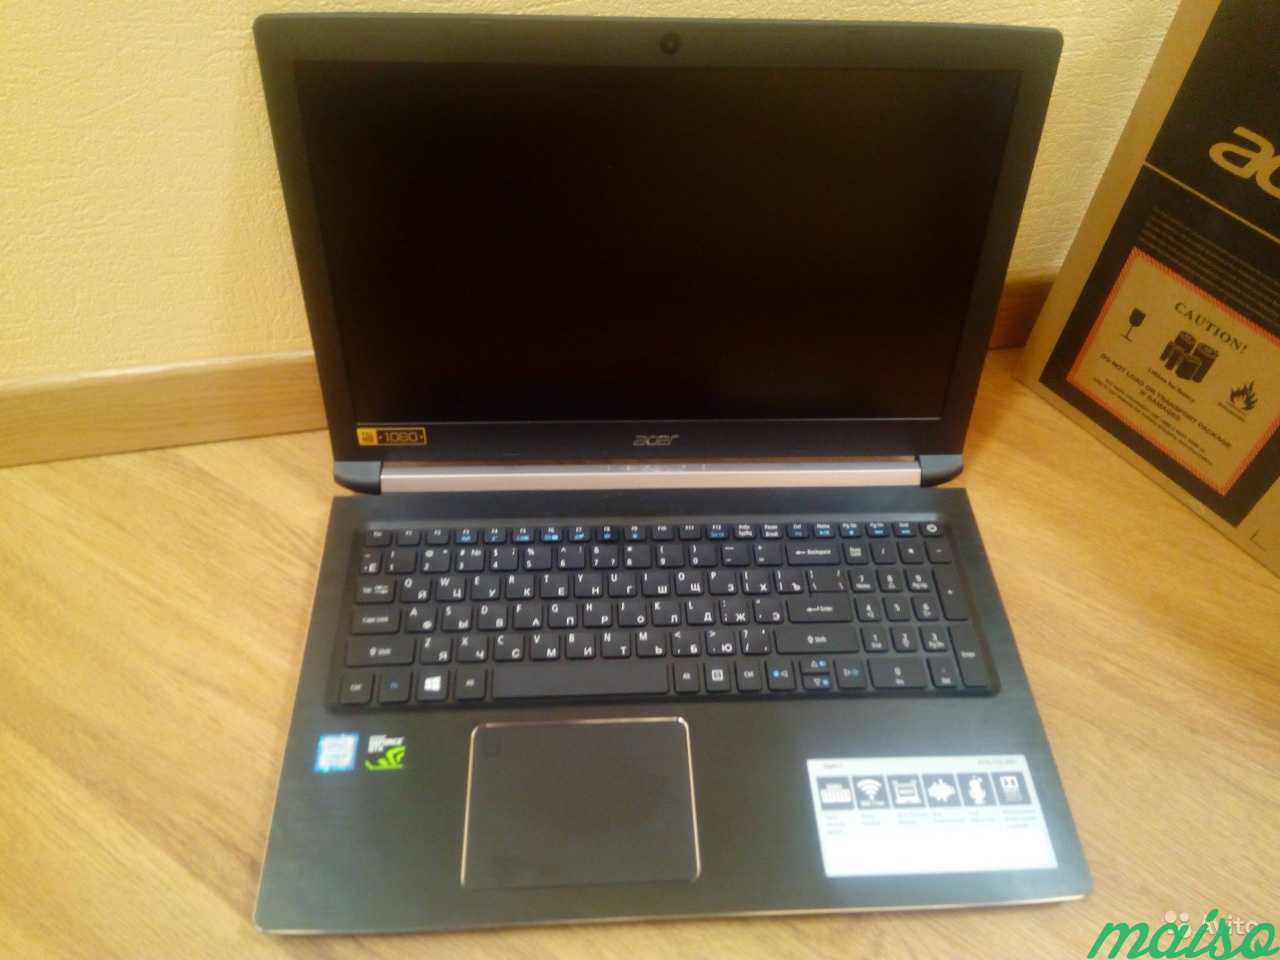 Acer Aspire a715-71g. Acer a715-71g-54zy. A715-71g-52mf.